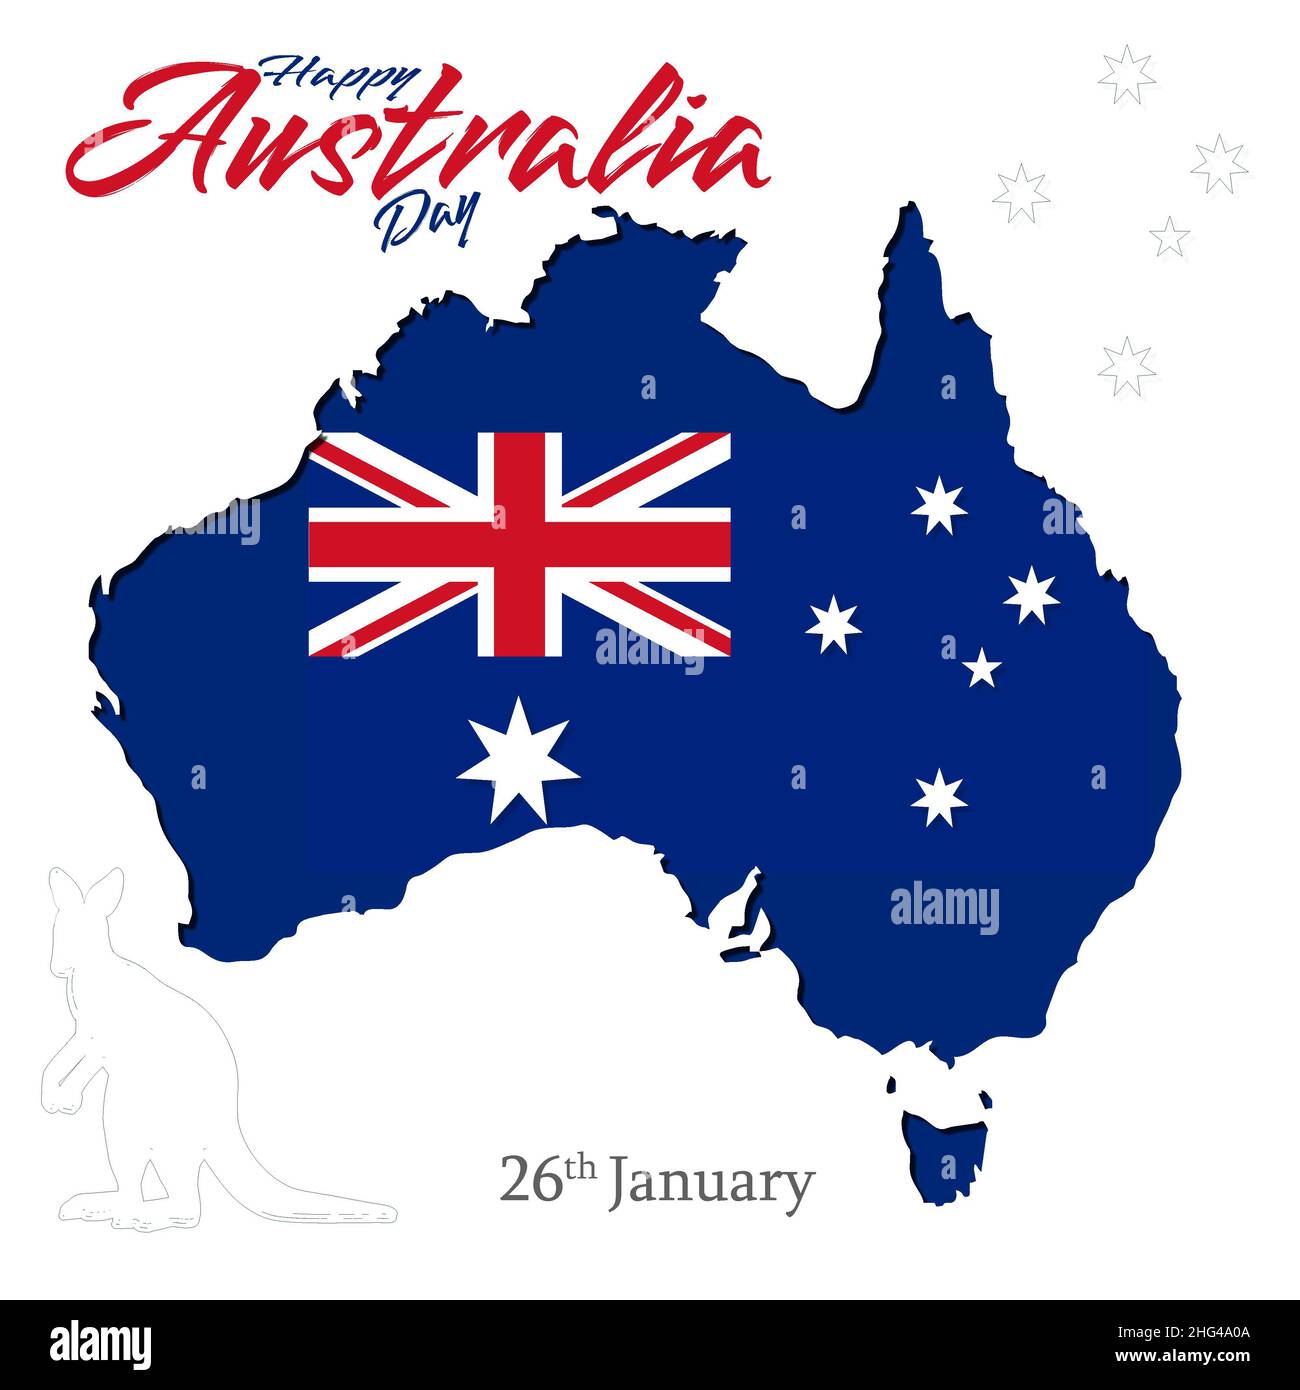 Happy Australia day concept. Australian flag with the text Happy Australia day illustration with white background for adding your Text . January 26 Stock Photo